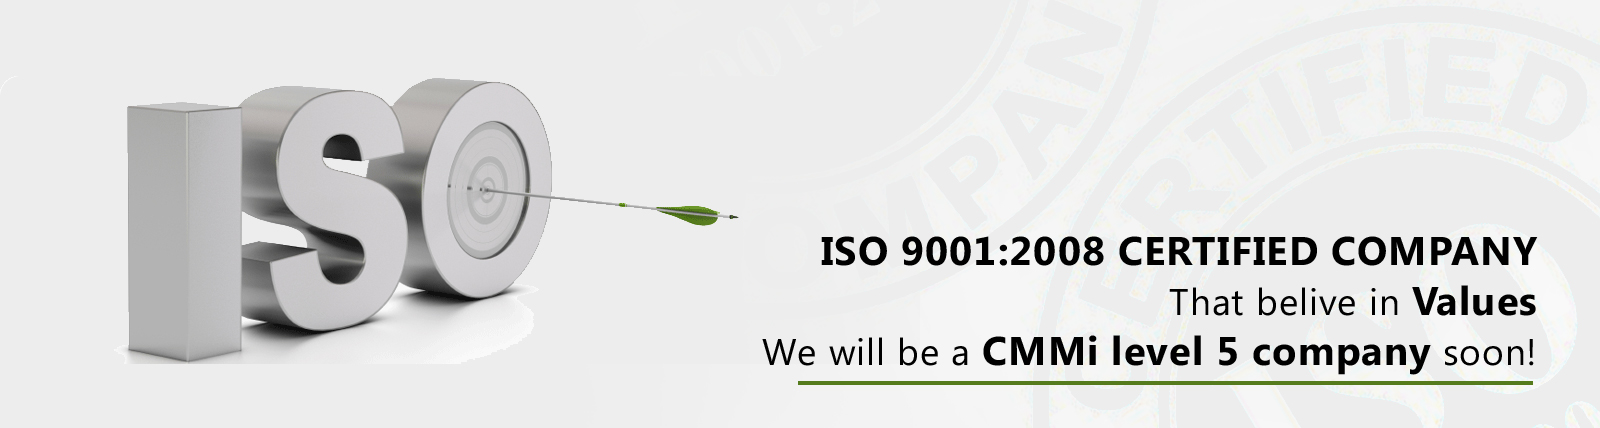 ISO Certified Digital Marketing Company